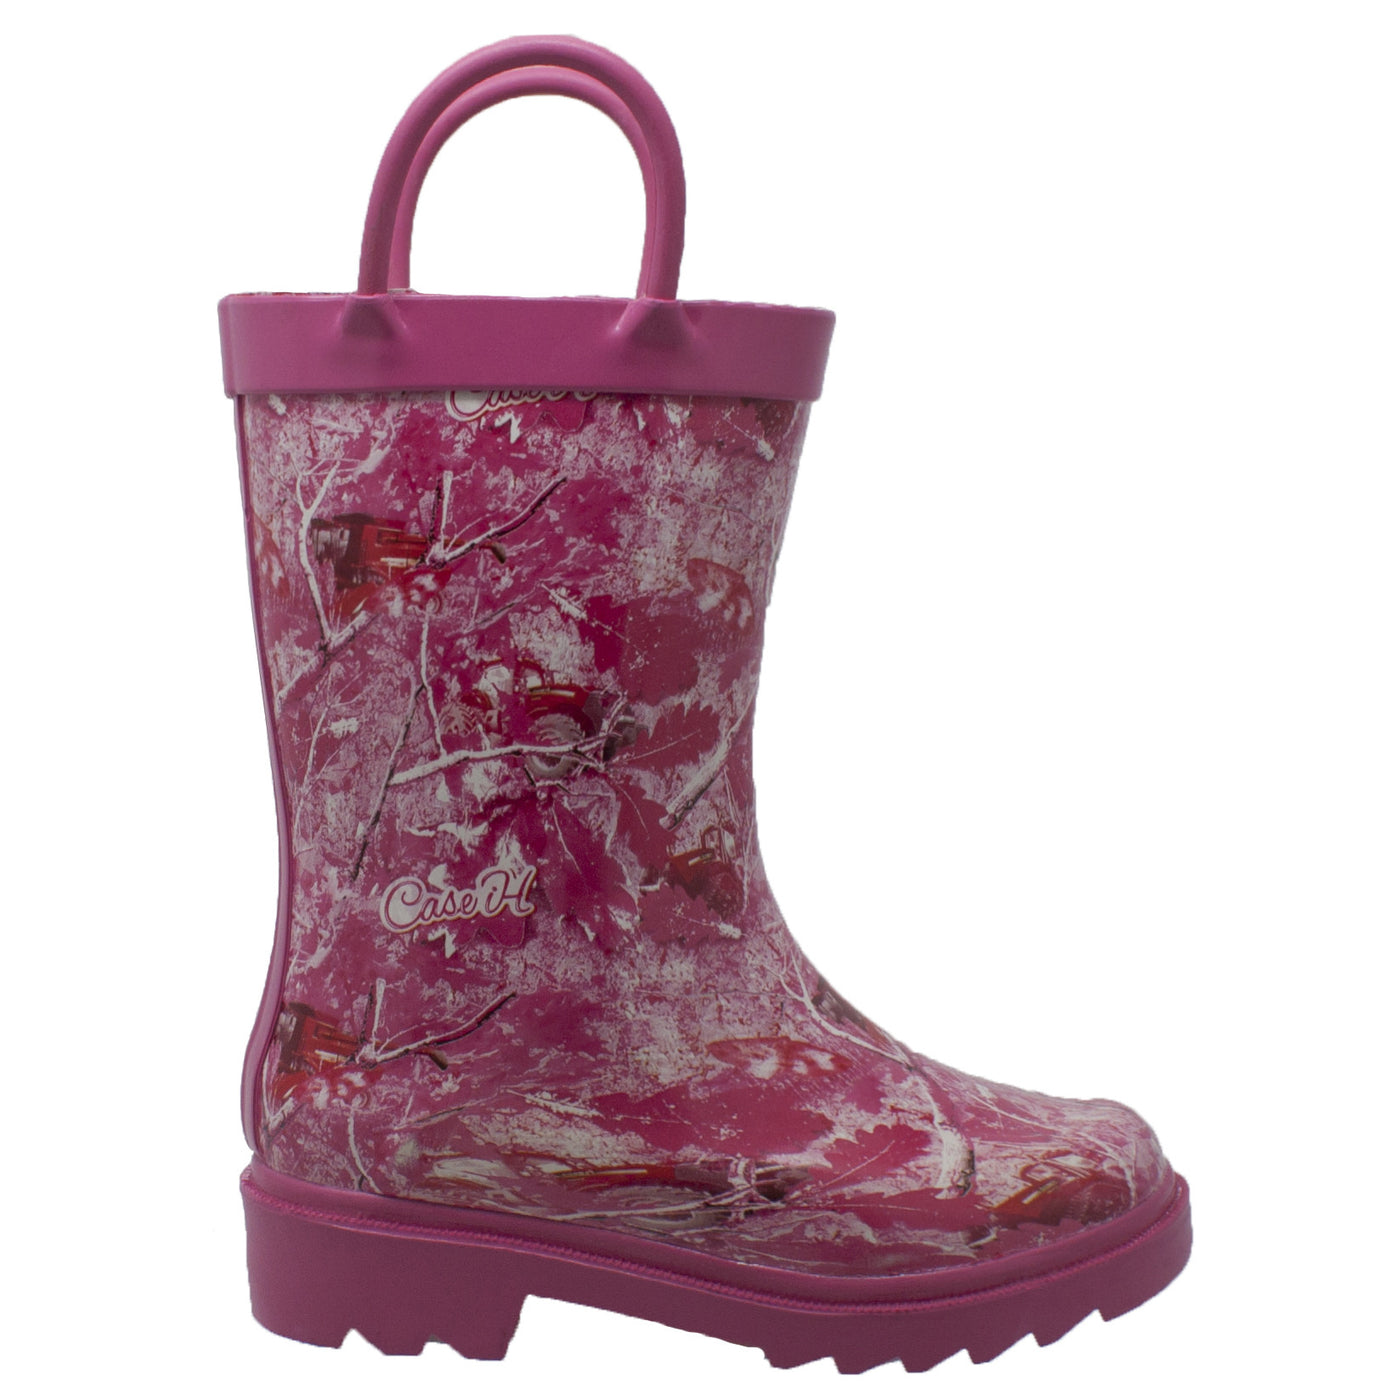 Children's Camo Rubber Boot Pink - CI-4006 - Shop Genuine Leather men & women's boots online | AdTecFootWear